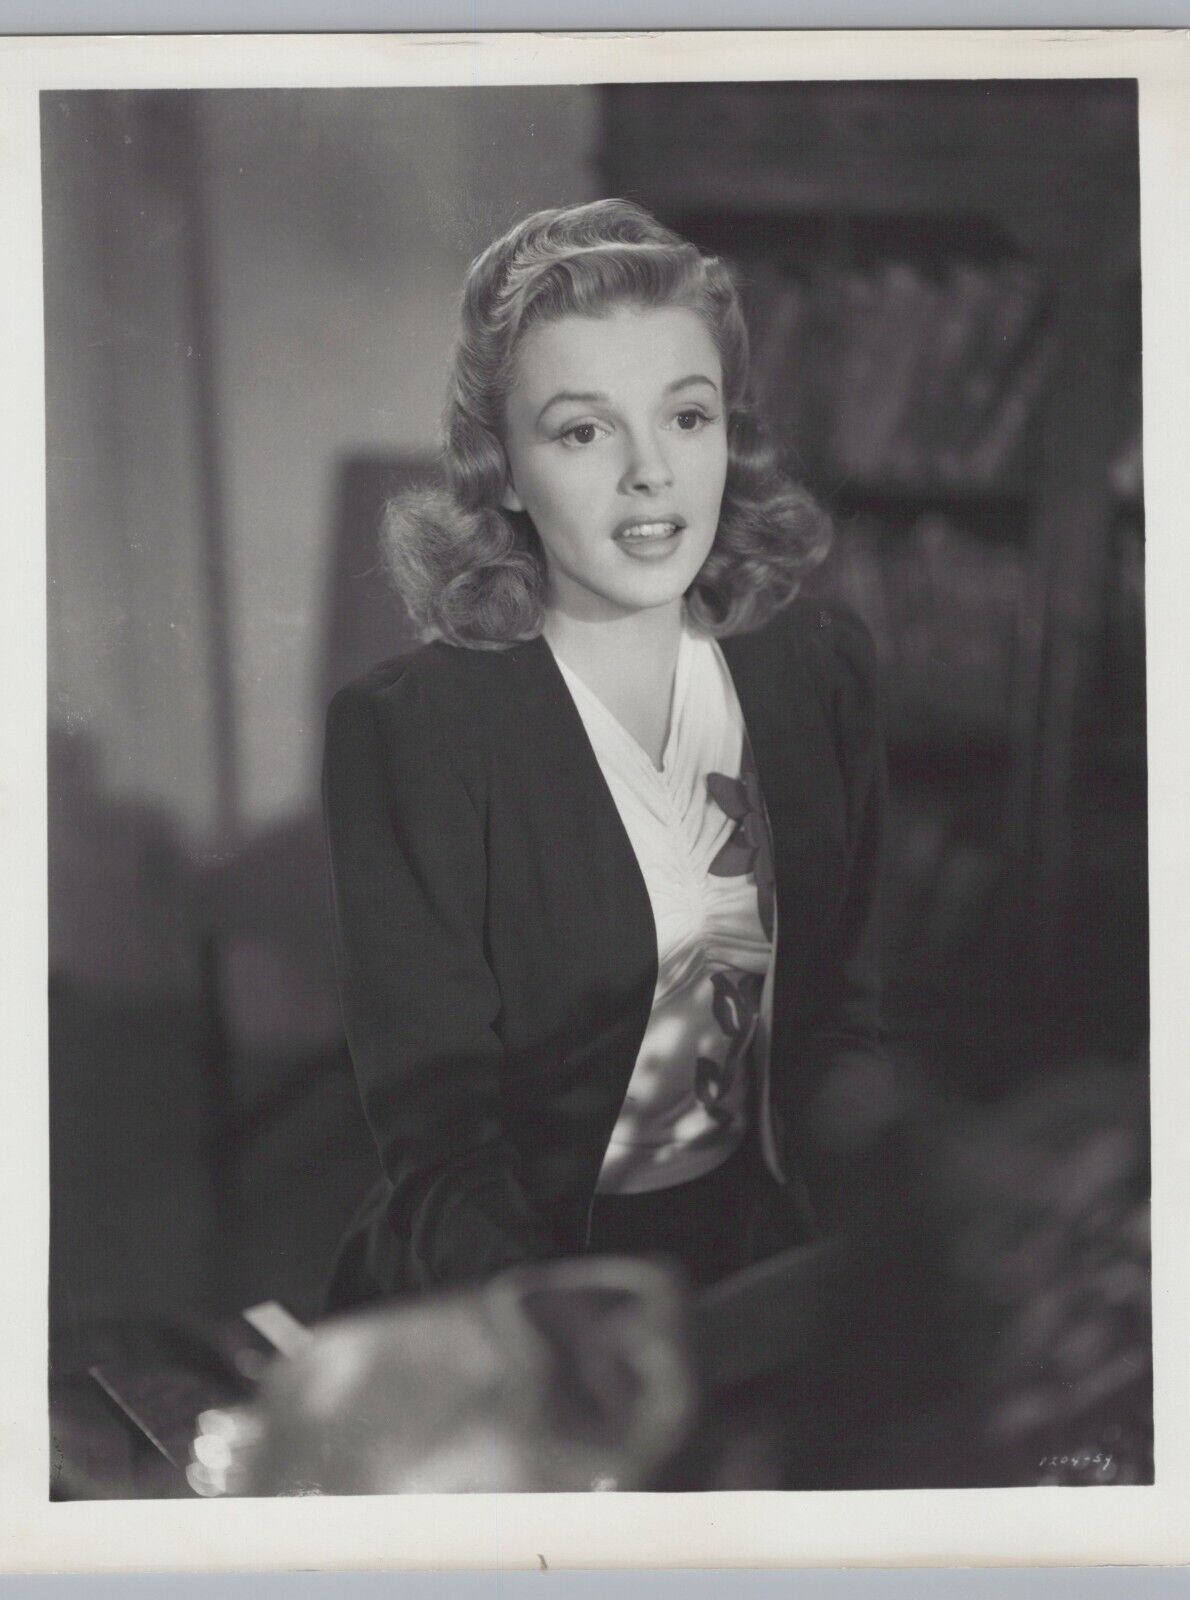 Judy Garland (1950s) ❤️ Vintage Hollywood Beauty Stunning Portrait Photo K 511